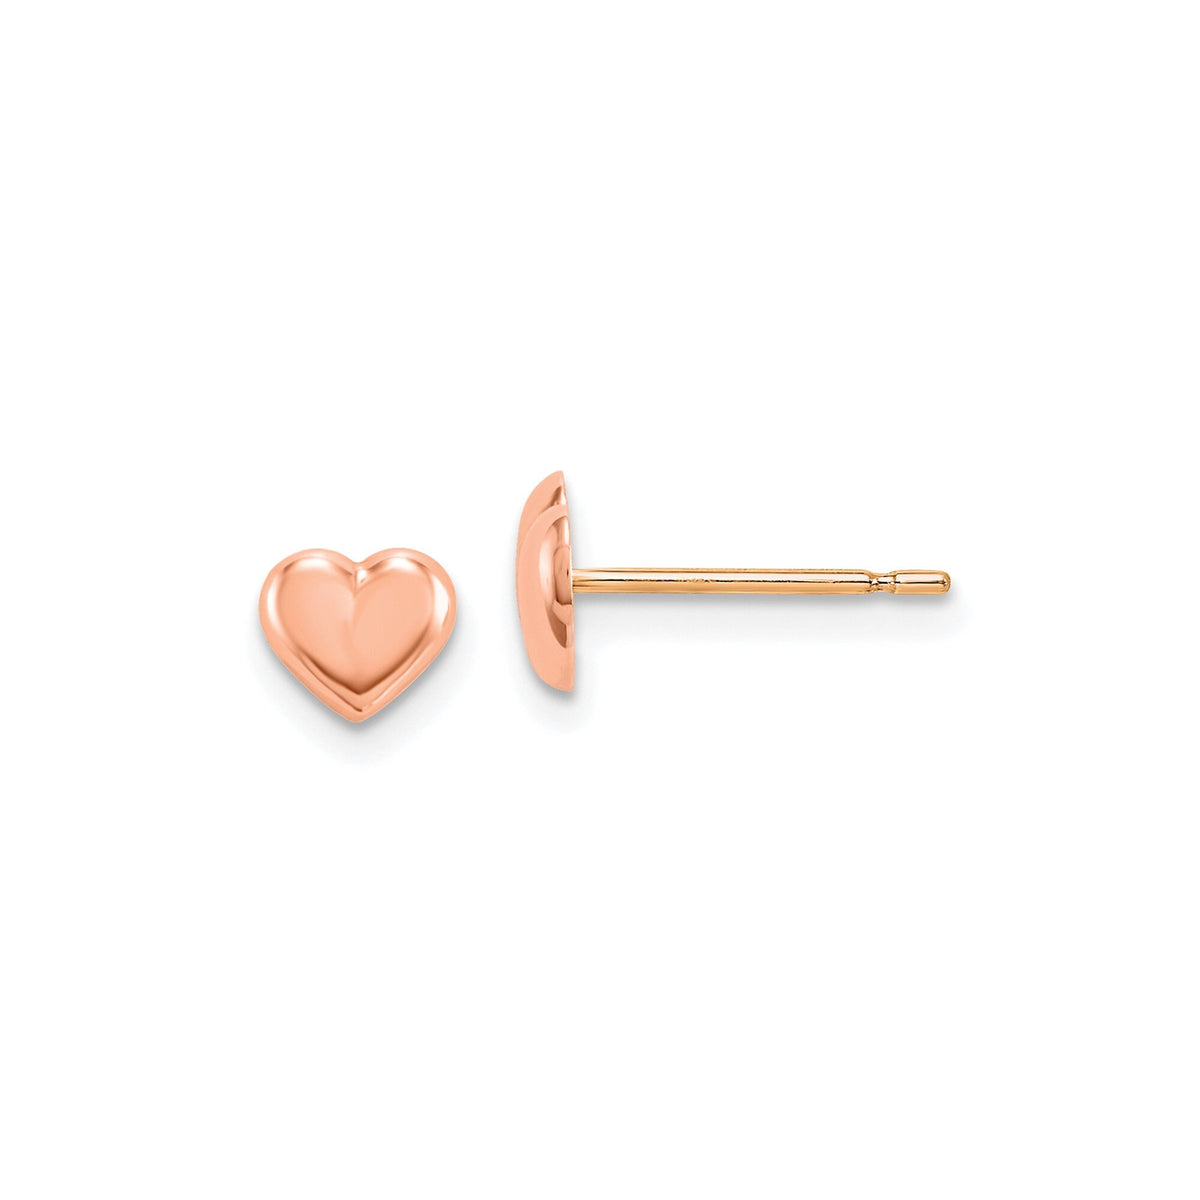 14k Rose Gold Baby / Toddler Heart Earrings 6x7mm Gift Box Included Made in USA Children Heart Earrings